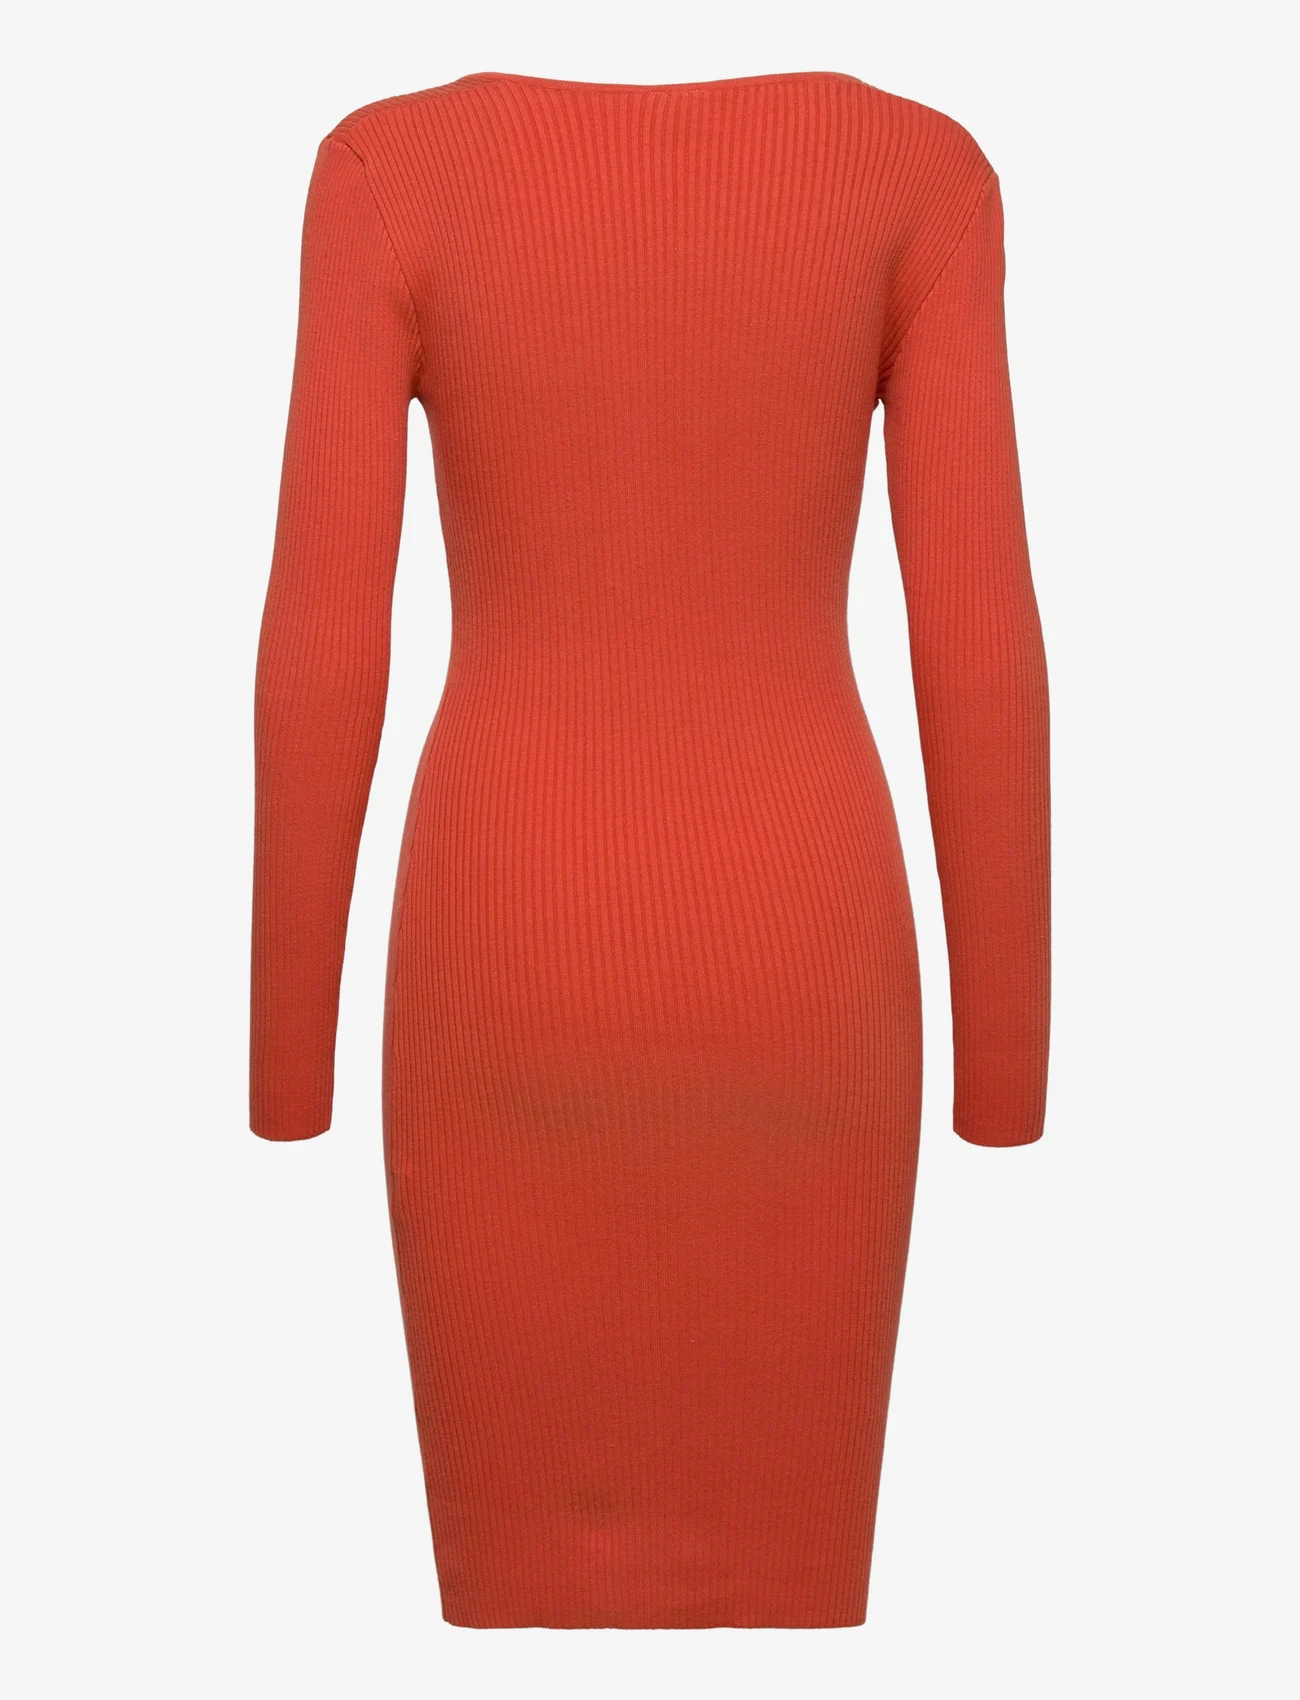 Twist & Tango - Aubrey Dress - bodycon dresses - coral red - 1